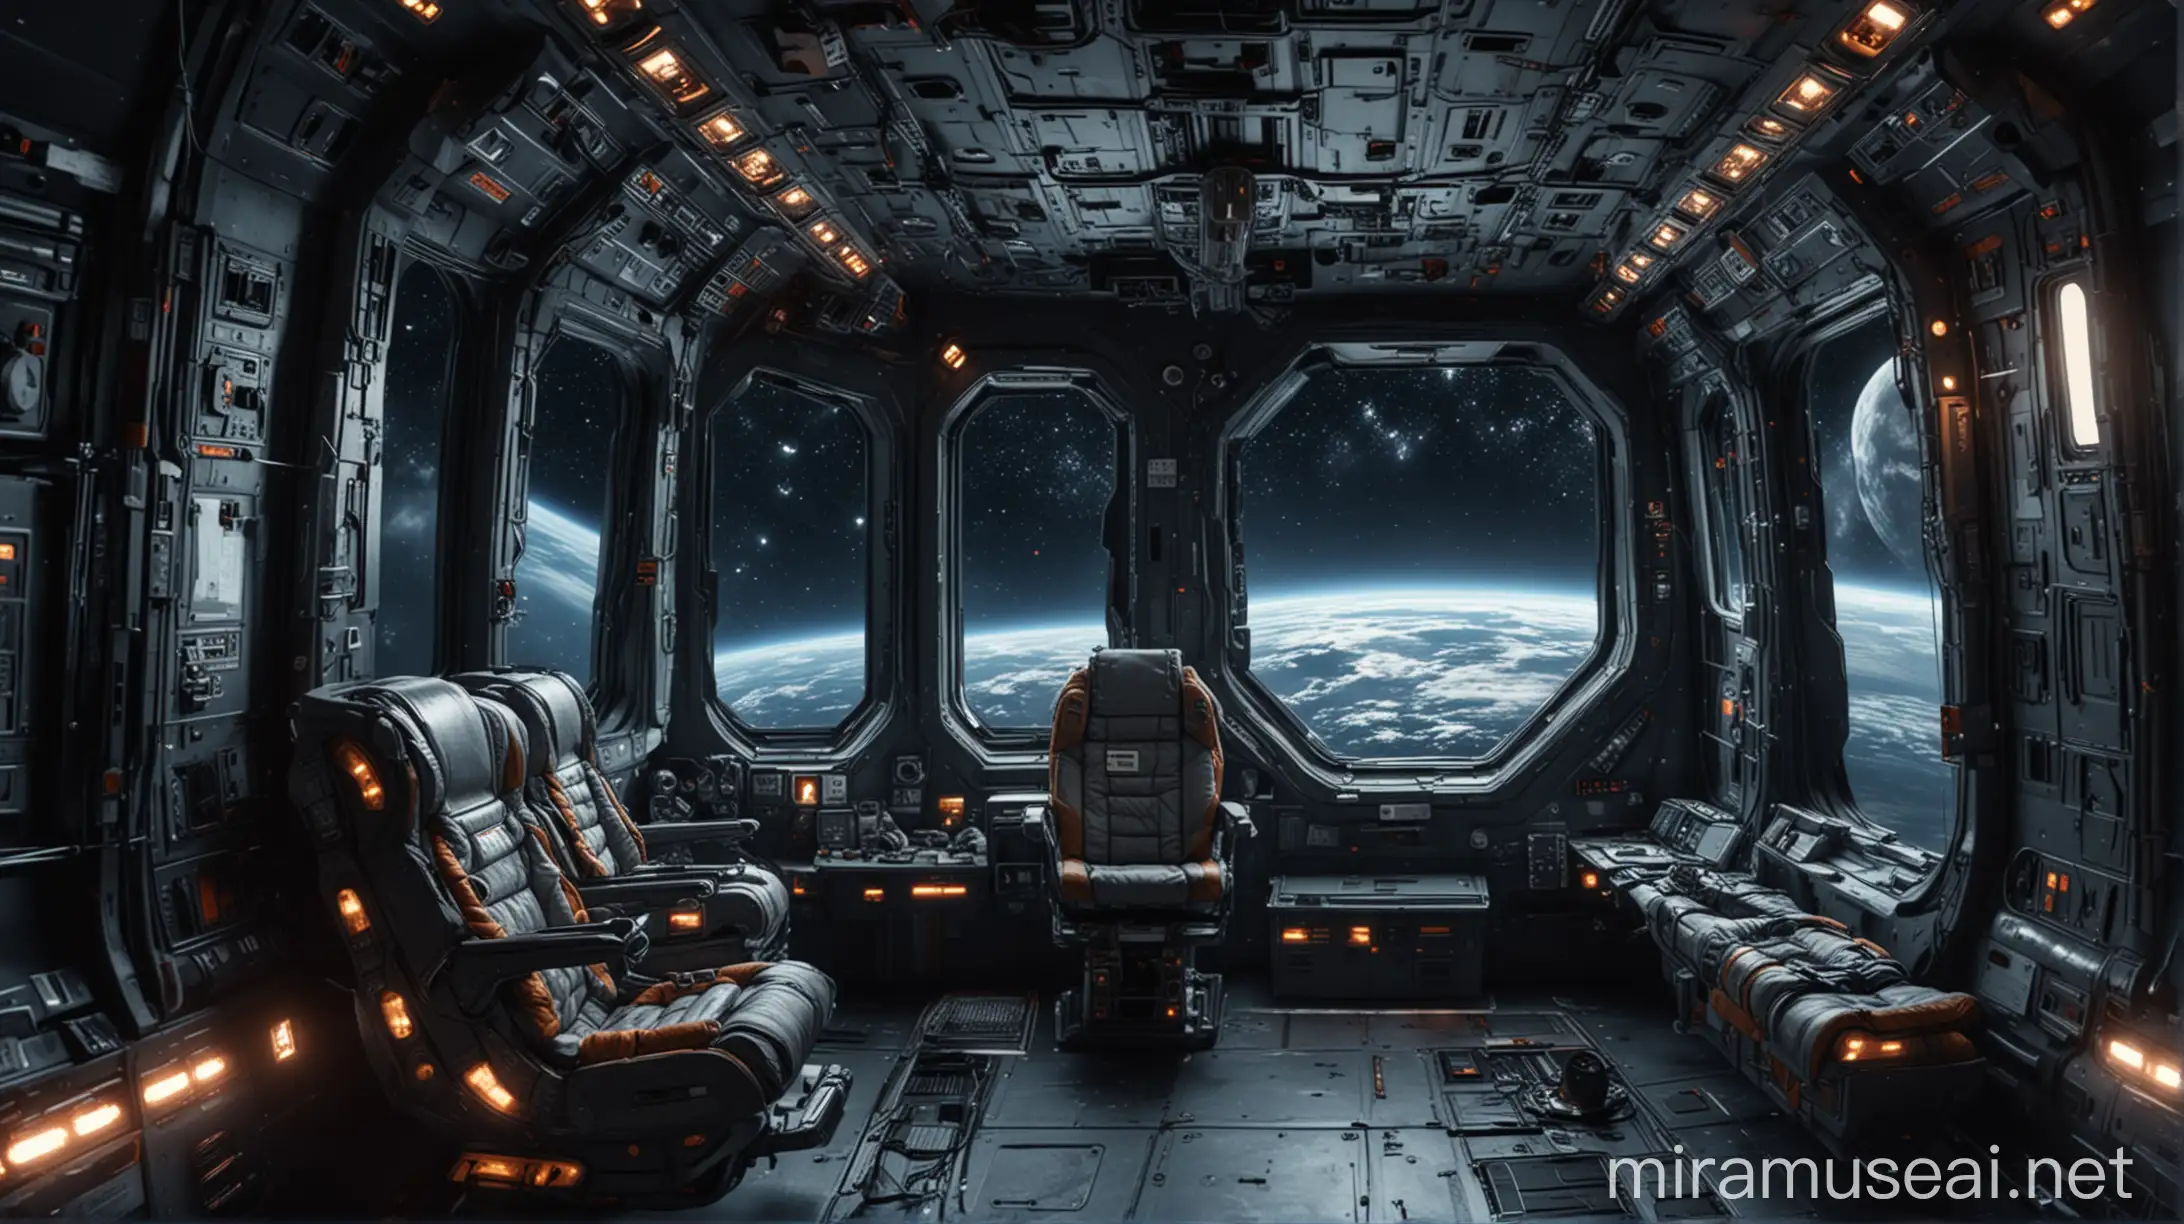 Futuristic Astronauts in HighTech Spaceship Under a Starlit Sky